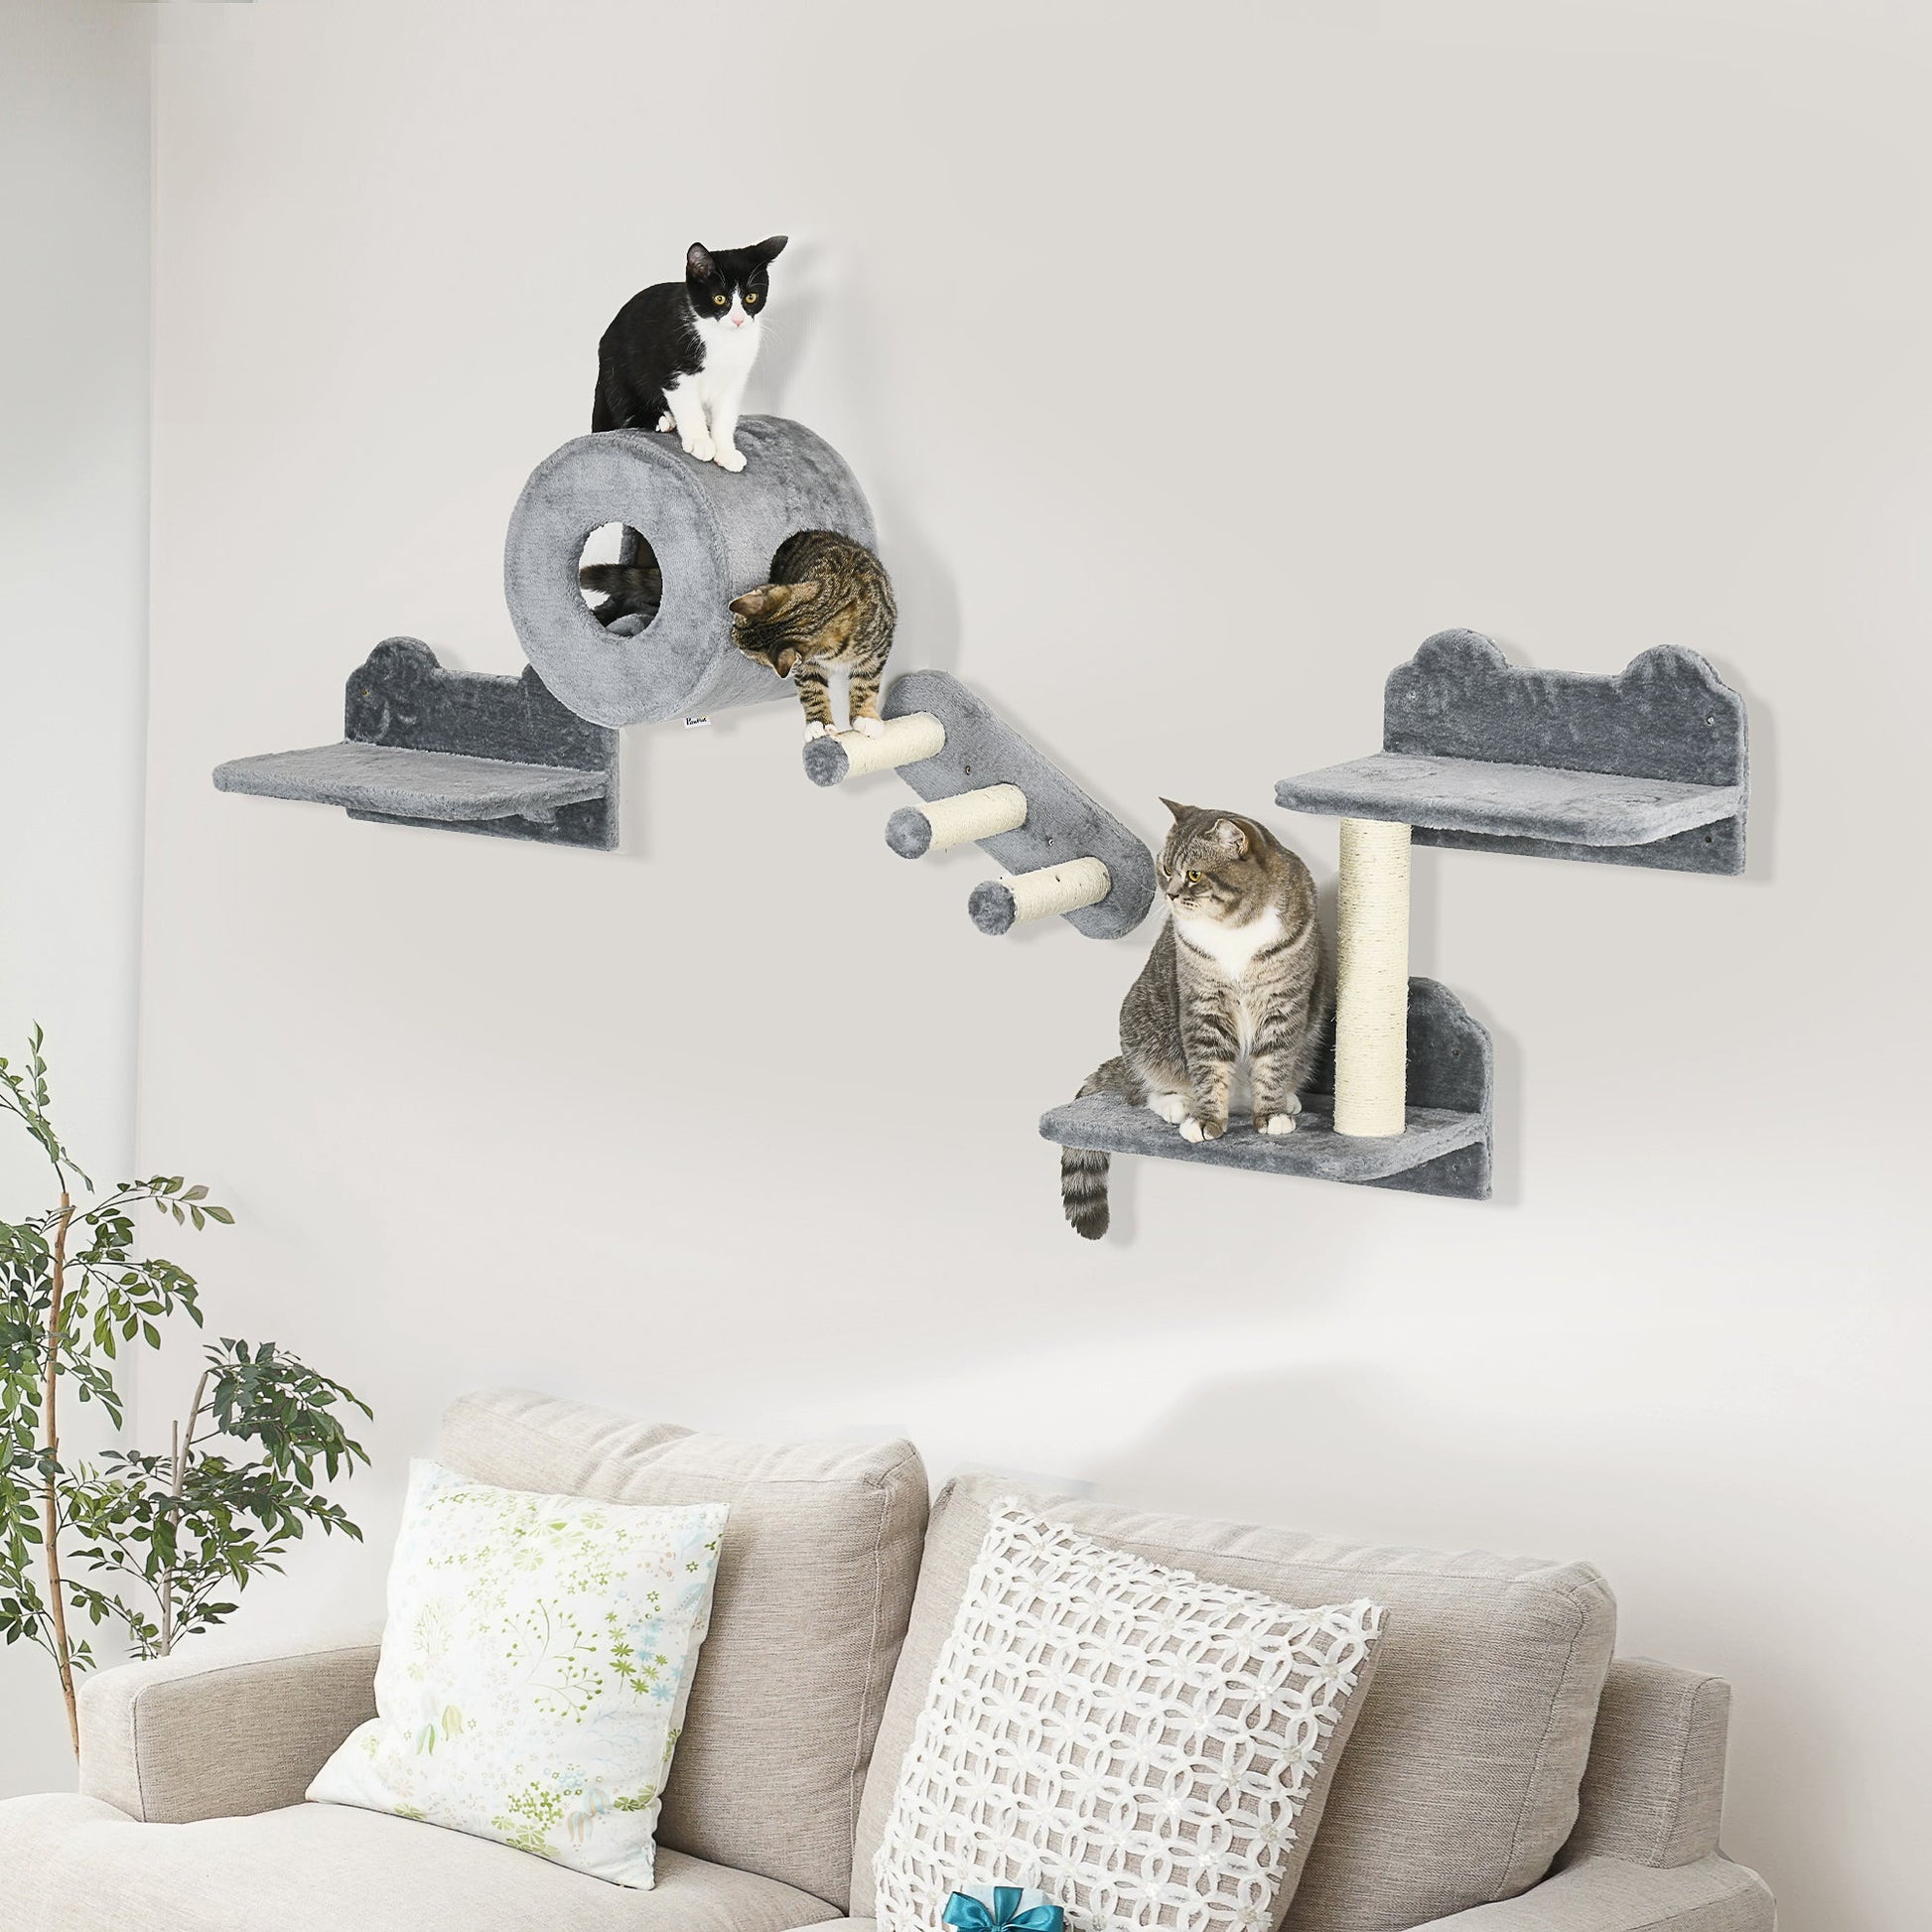 4 PCs 9.3" H Cat Wall Shelves, Pet Wall-mounted Climbing Shelf Set, Kitten Activity Centre with Condo, Cushion, Scratching Post, Jumping Platform, Grey at Gallery Canada